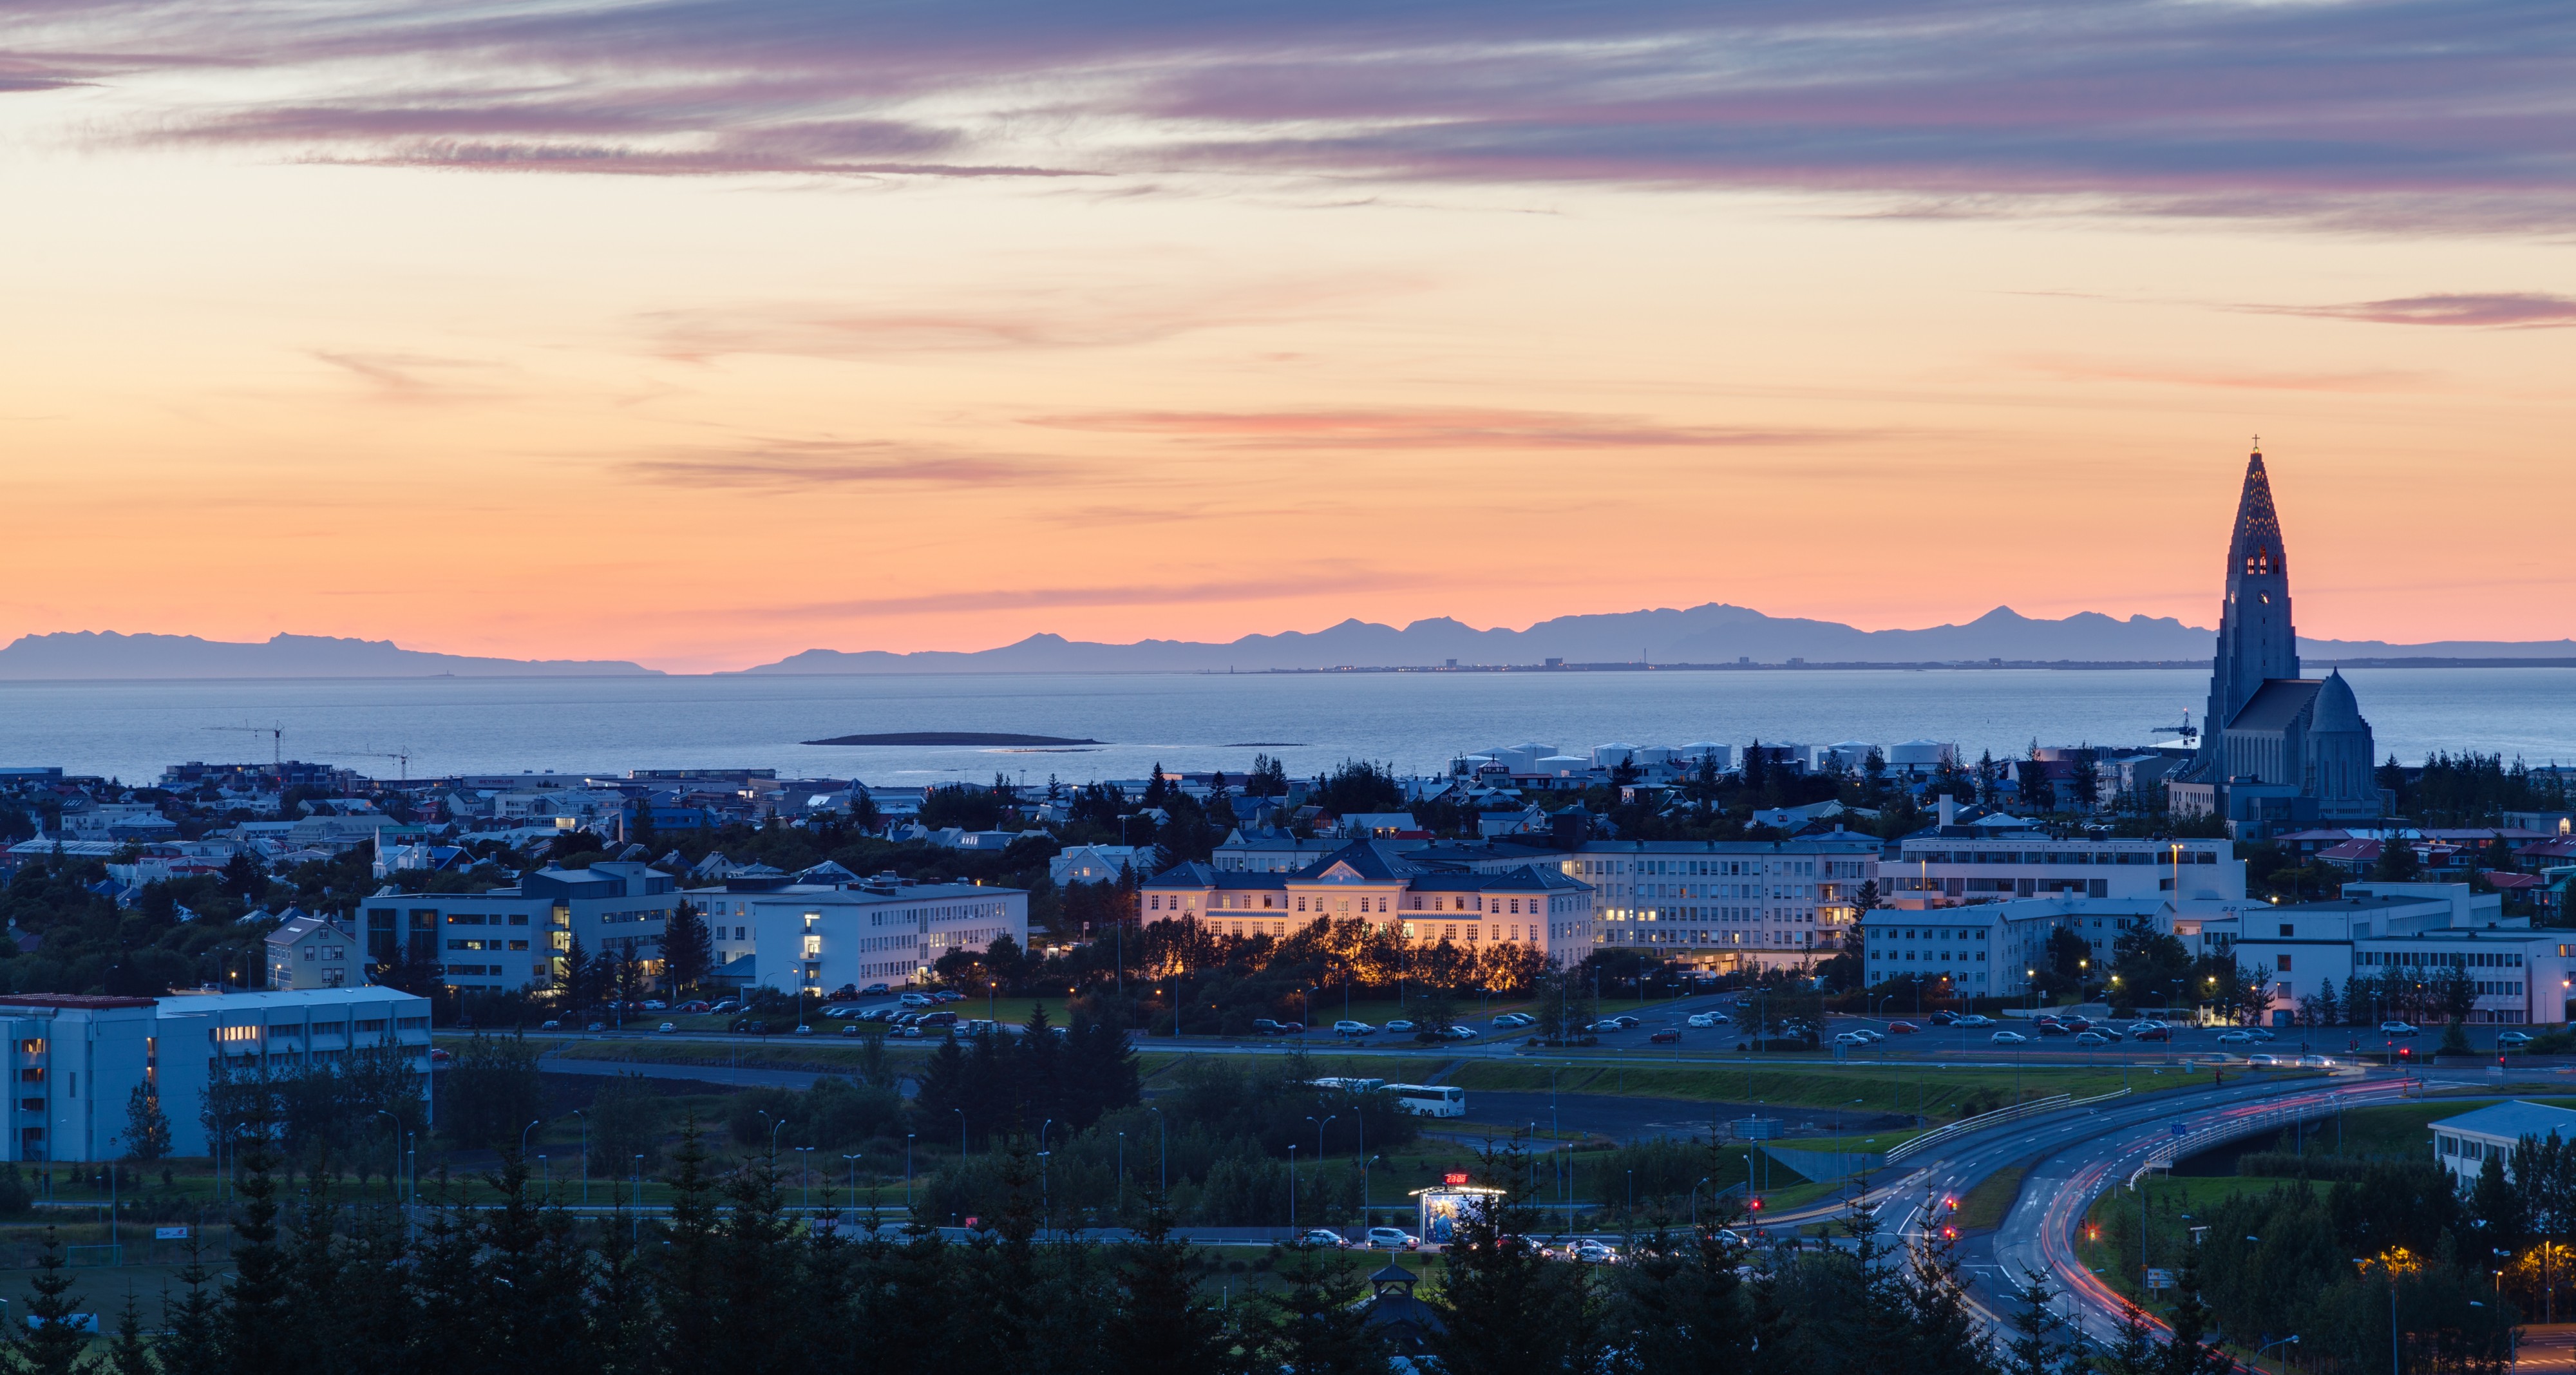 Vista de Reikiavik desde Perlan, Distrito de la Capital, Islandia, 2014-08-13, DD 146-148 HDR